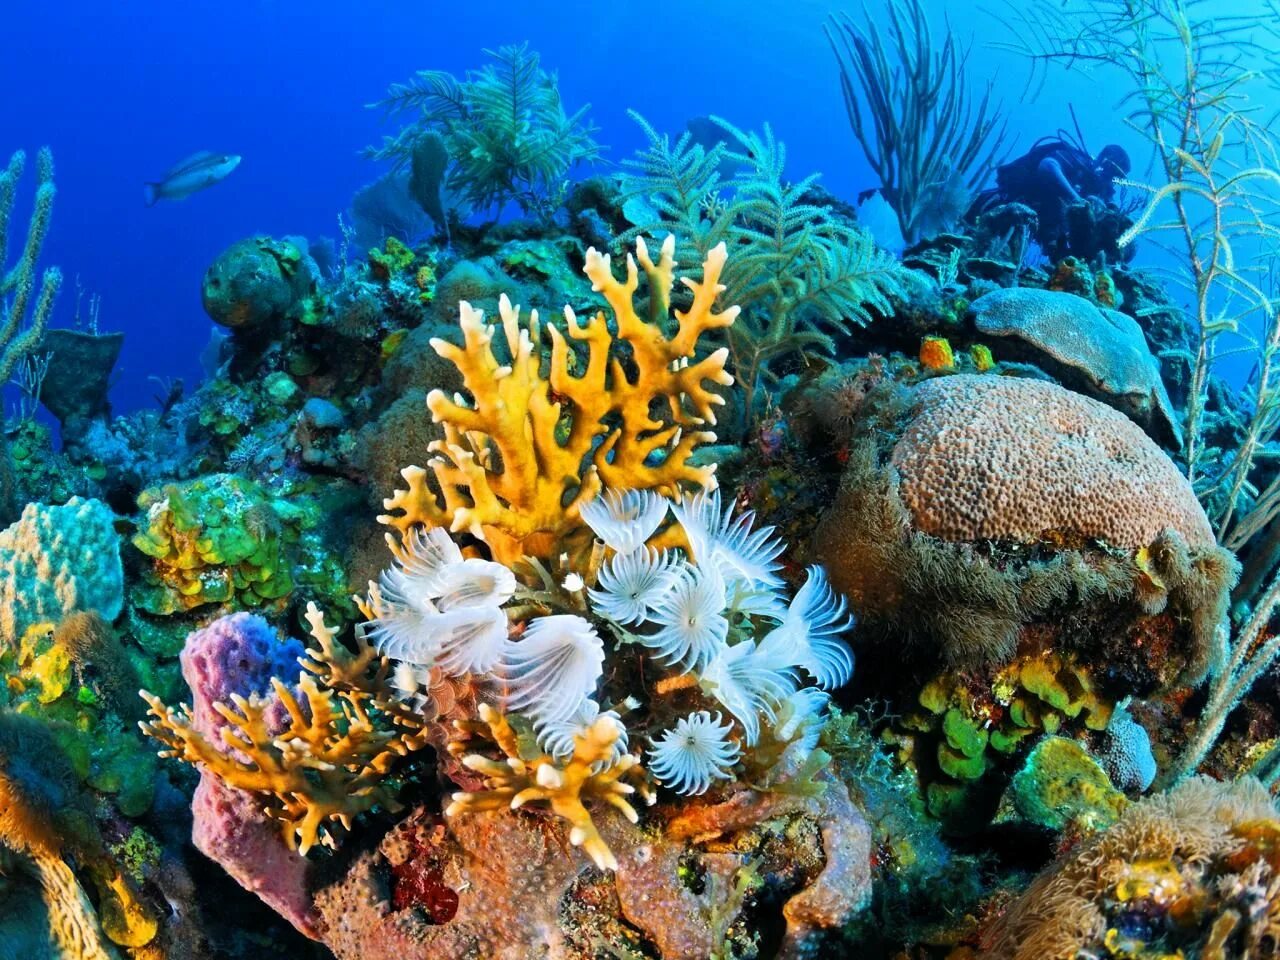 El coral. Риф Туббатаха Филиппины. Эльфинстоун риф. Рифы в океане. Барьерный риф кораллы.